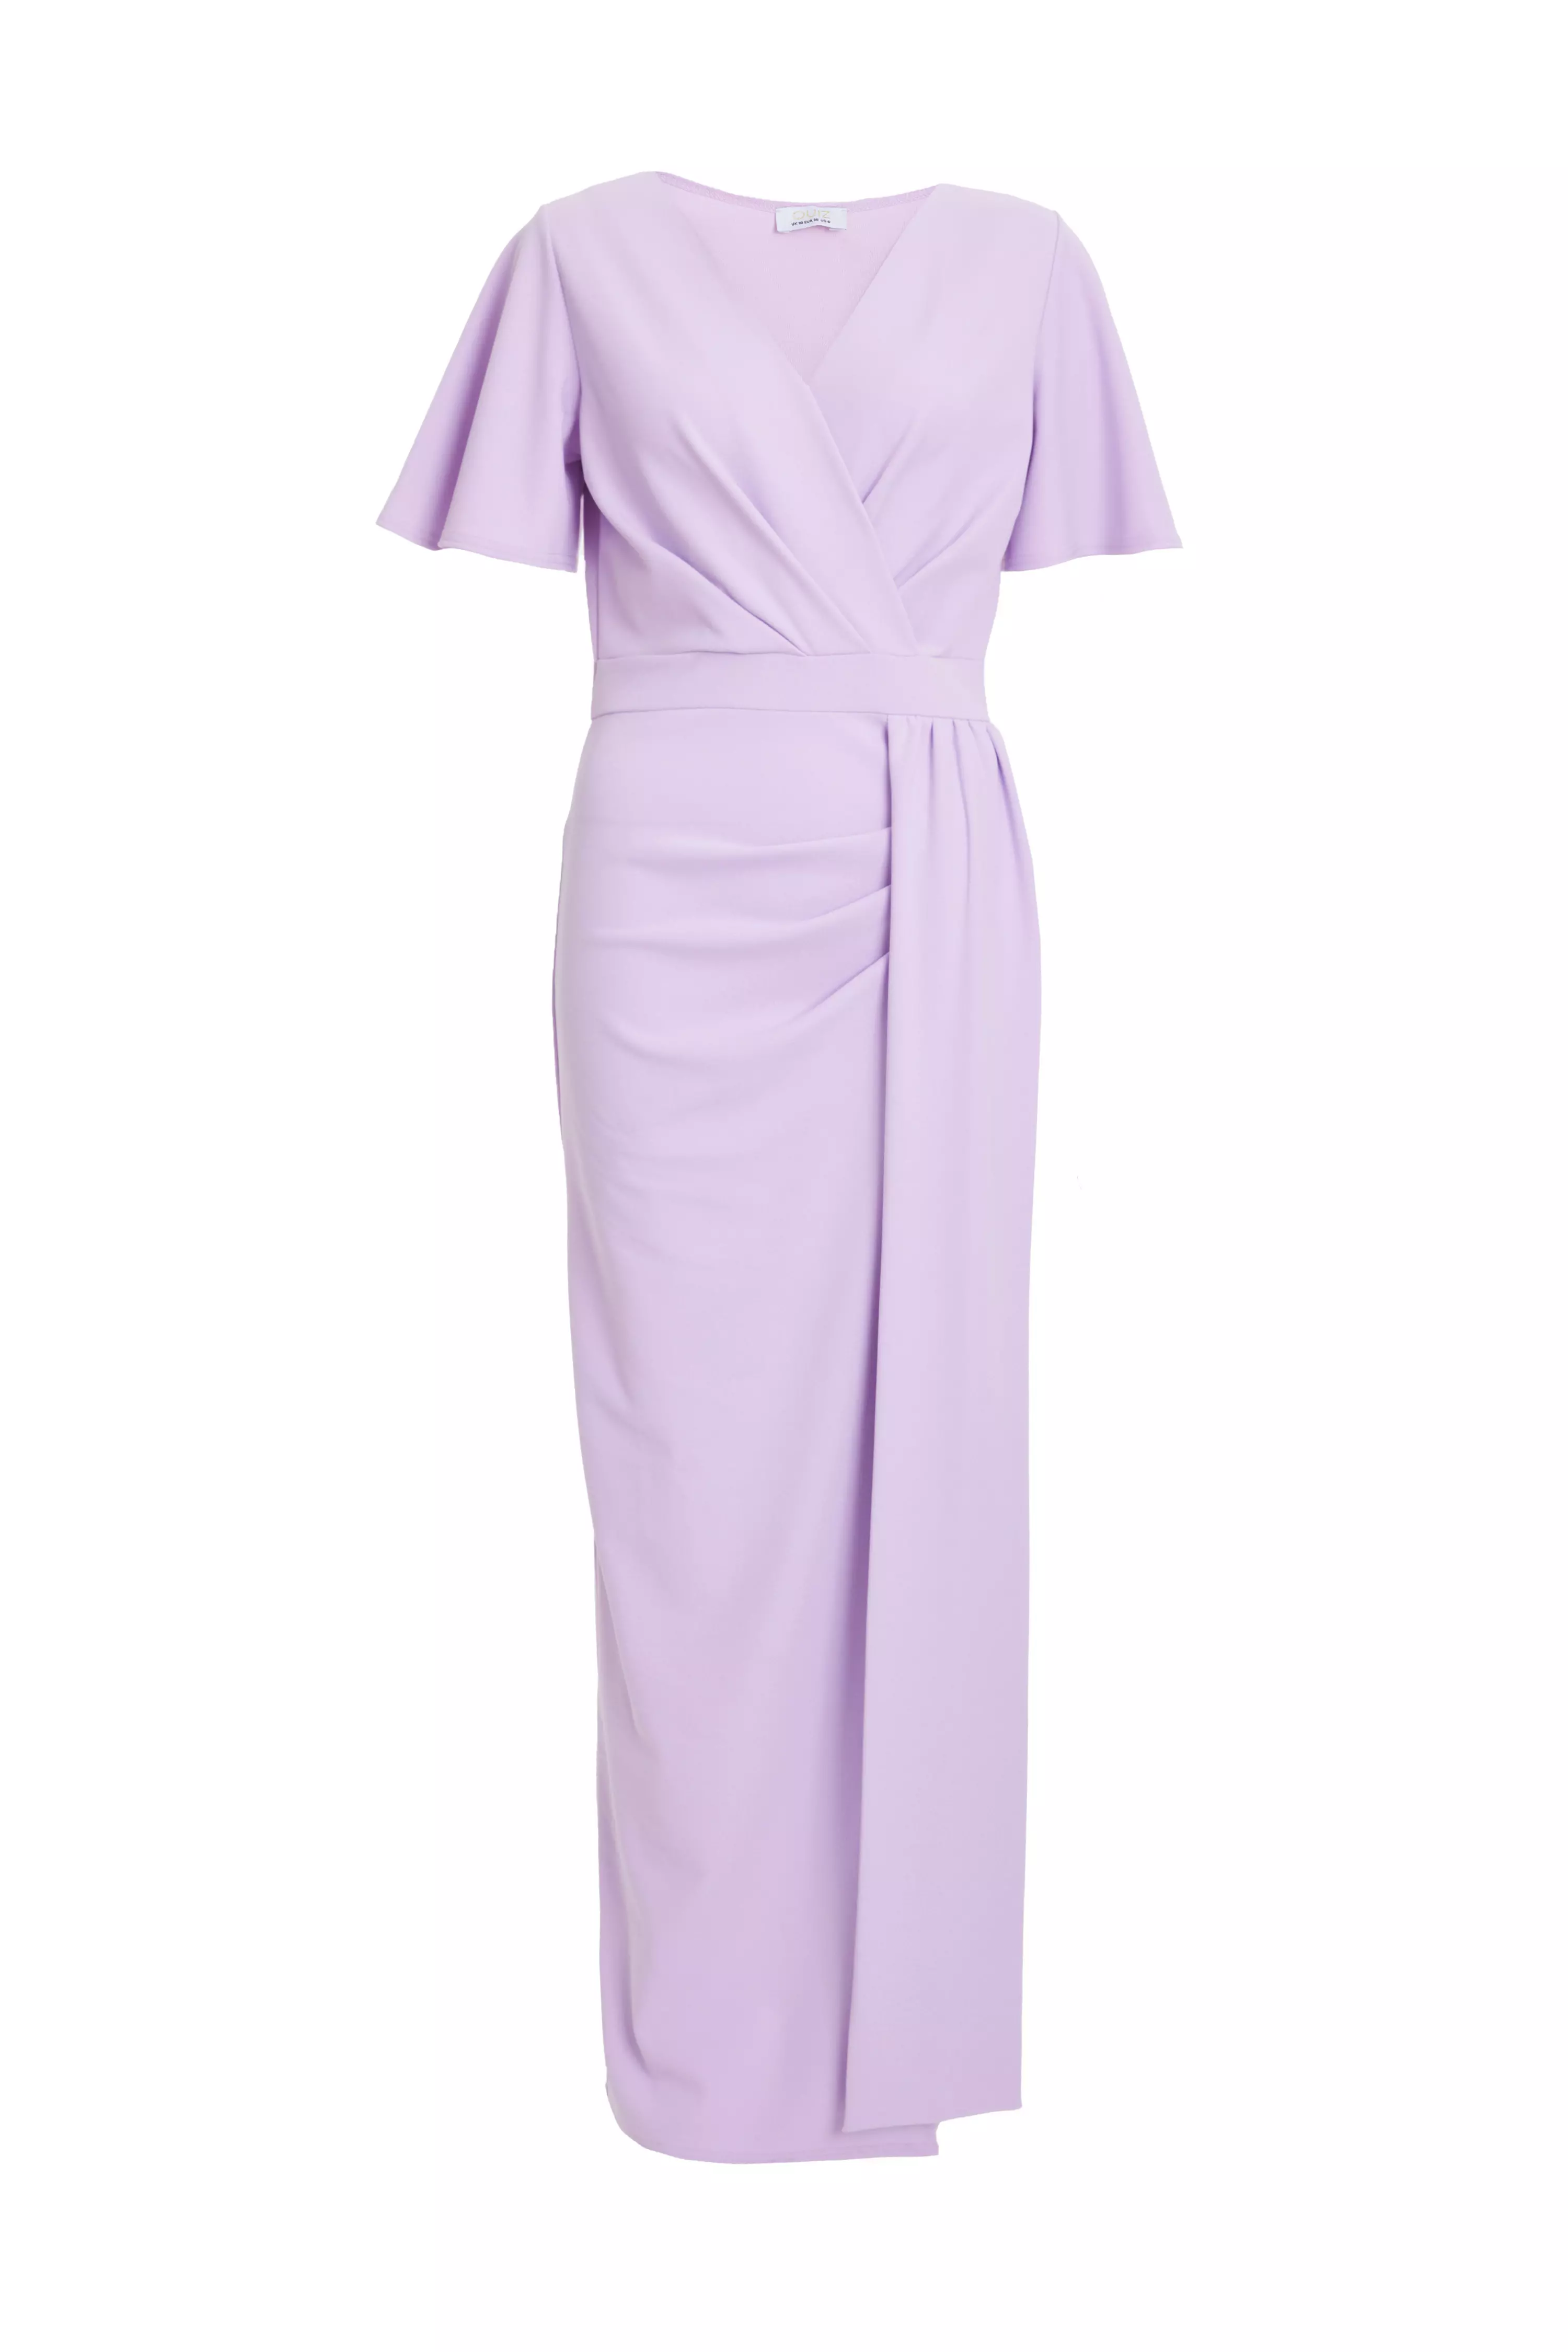 Lilac Wrap Maxi Dress